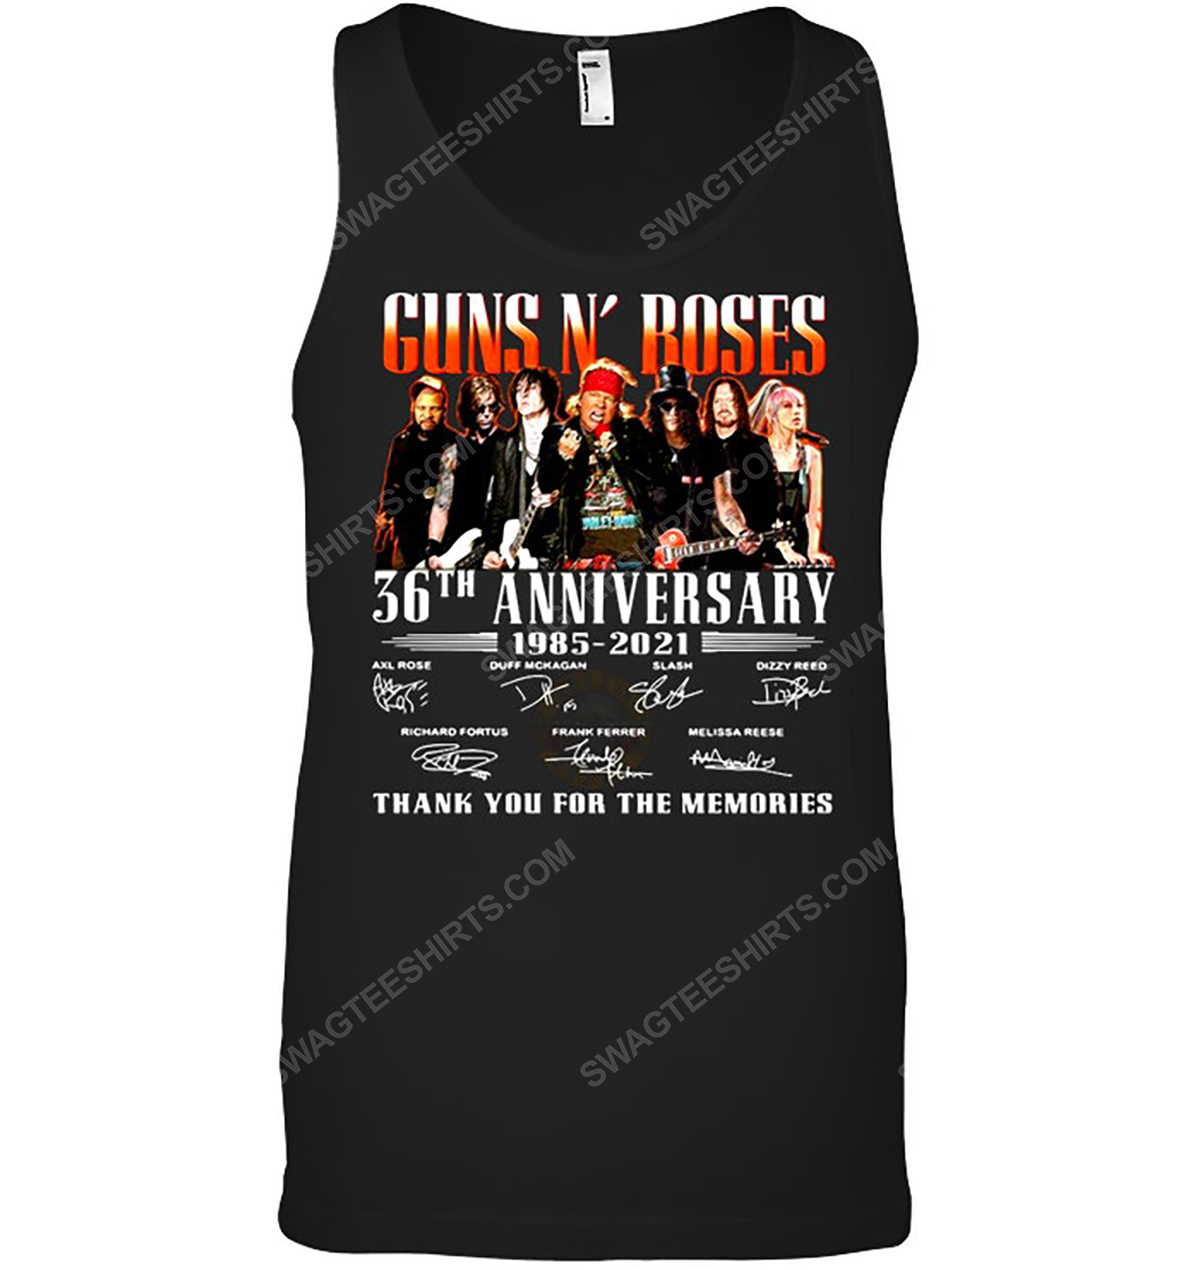 Guns n roses 35th anniversary thank you for memories tank top 1